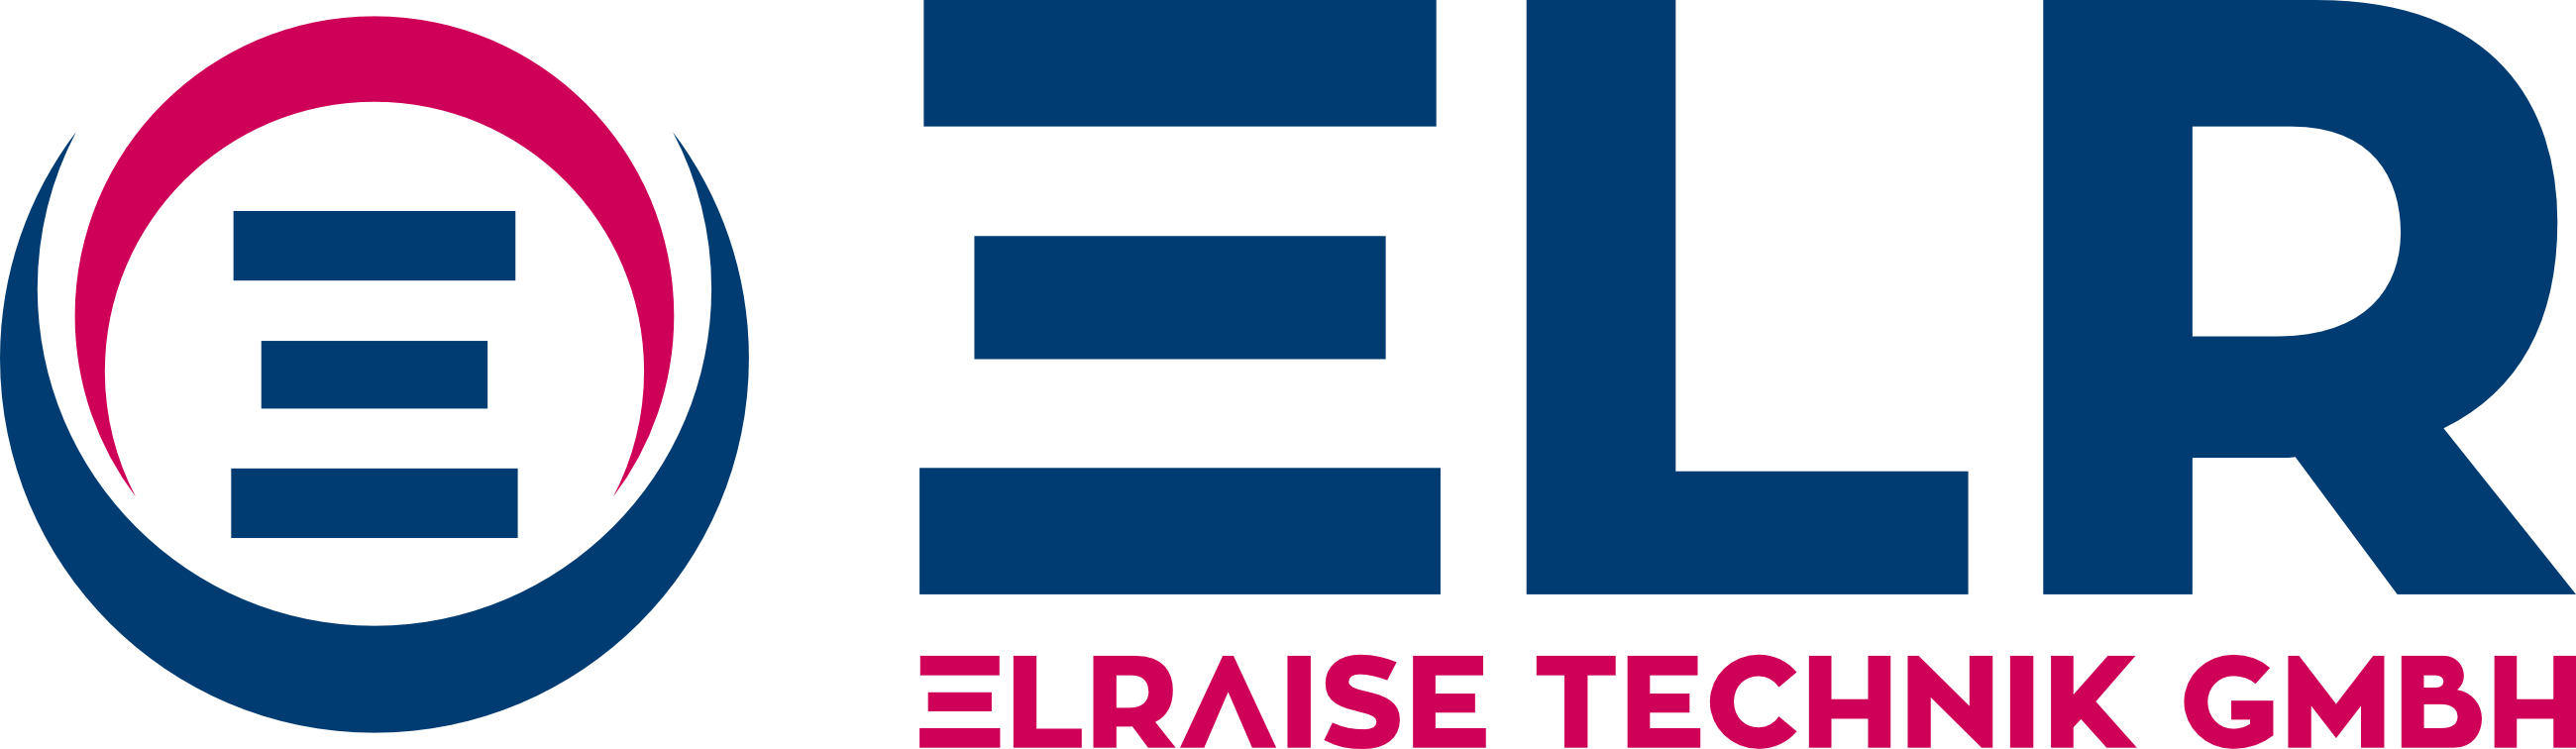 ELRaise Technik GmbH